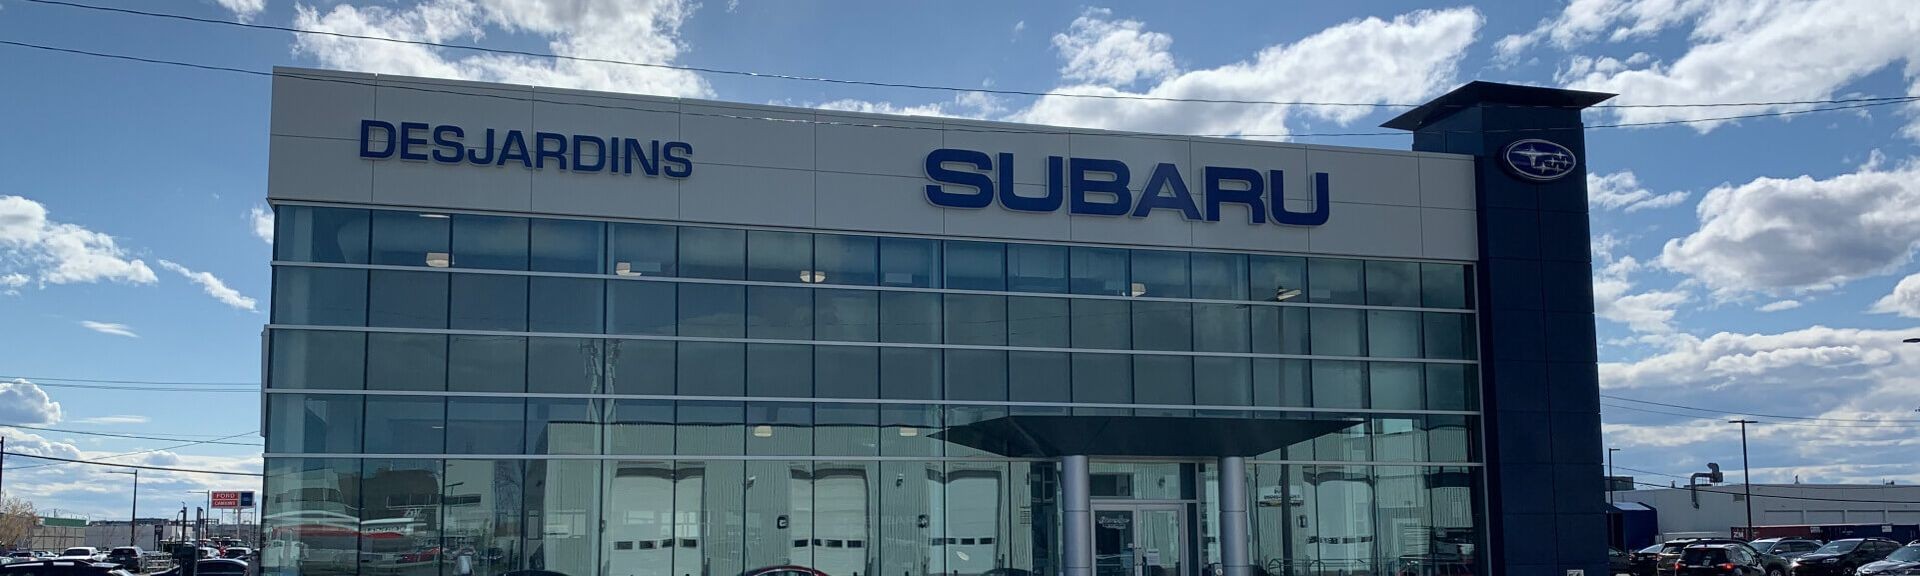 About Desjardins Subaru